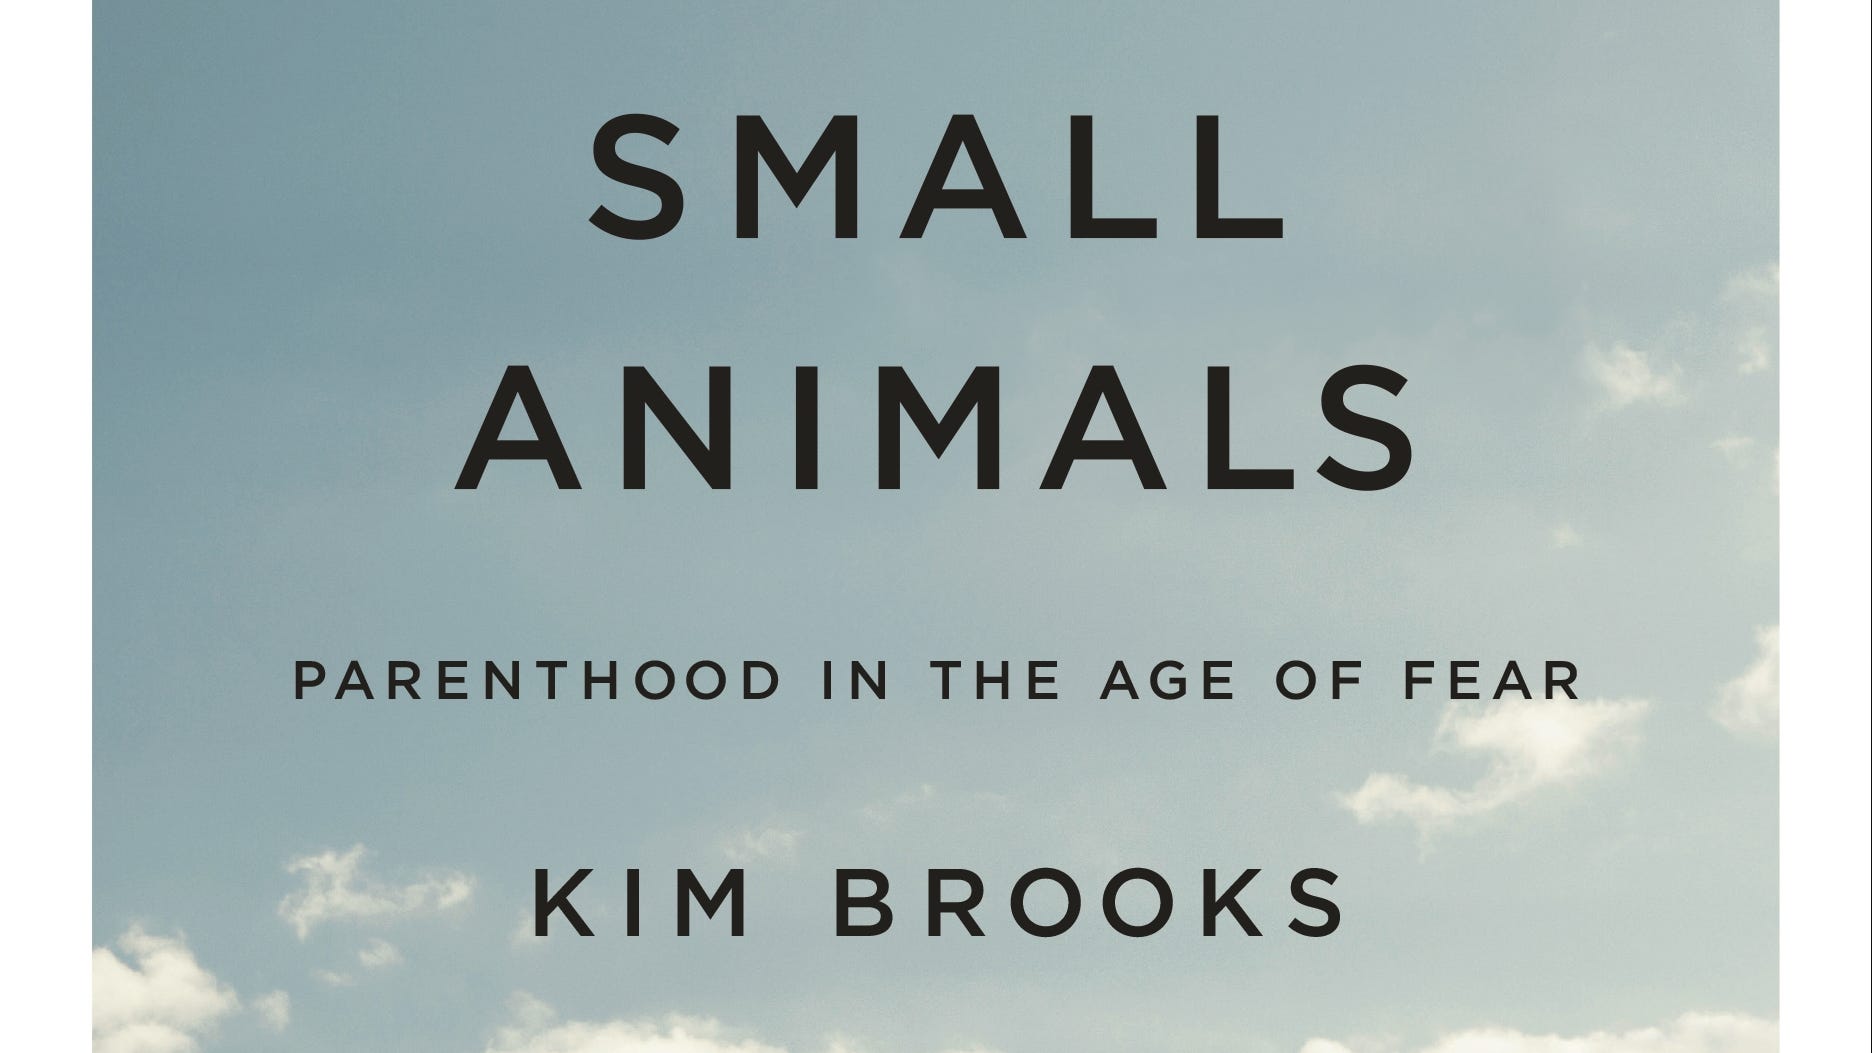 Kim Brooks' 'Small Animals' unpacks the fear consuming modern moms